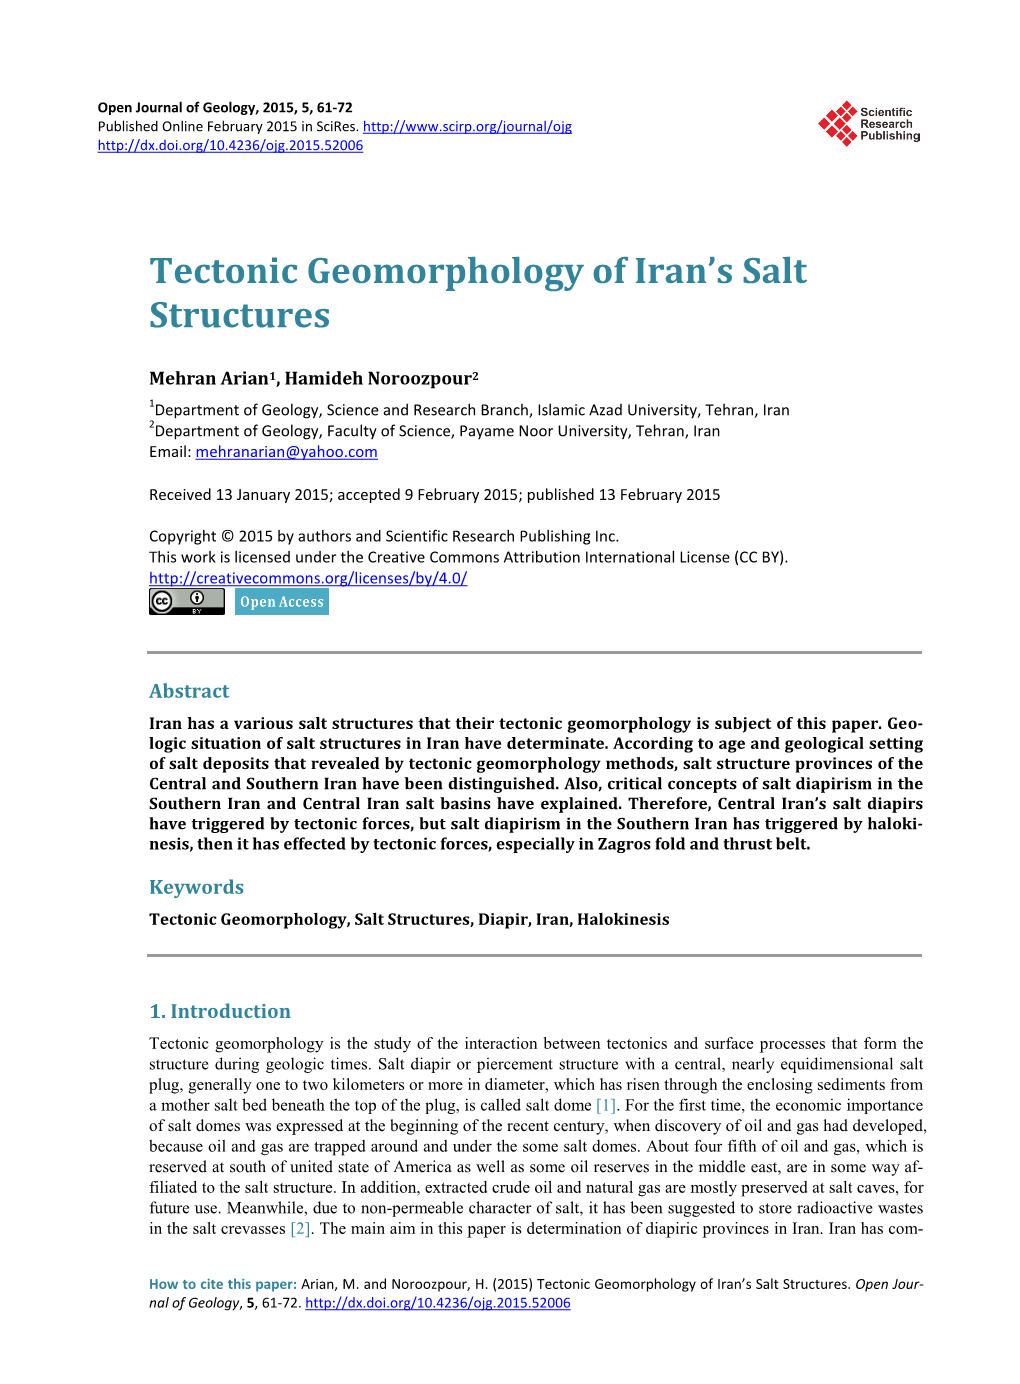 Tectonic Geomorphology of Iran's Salt Structures